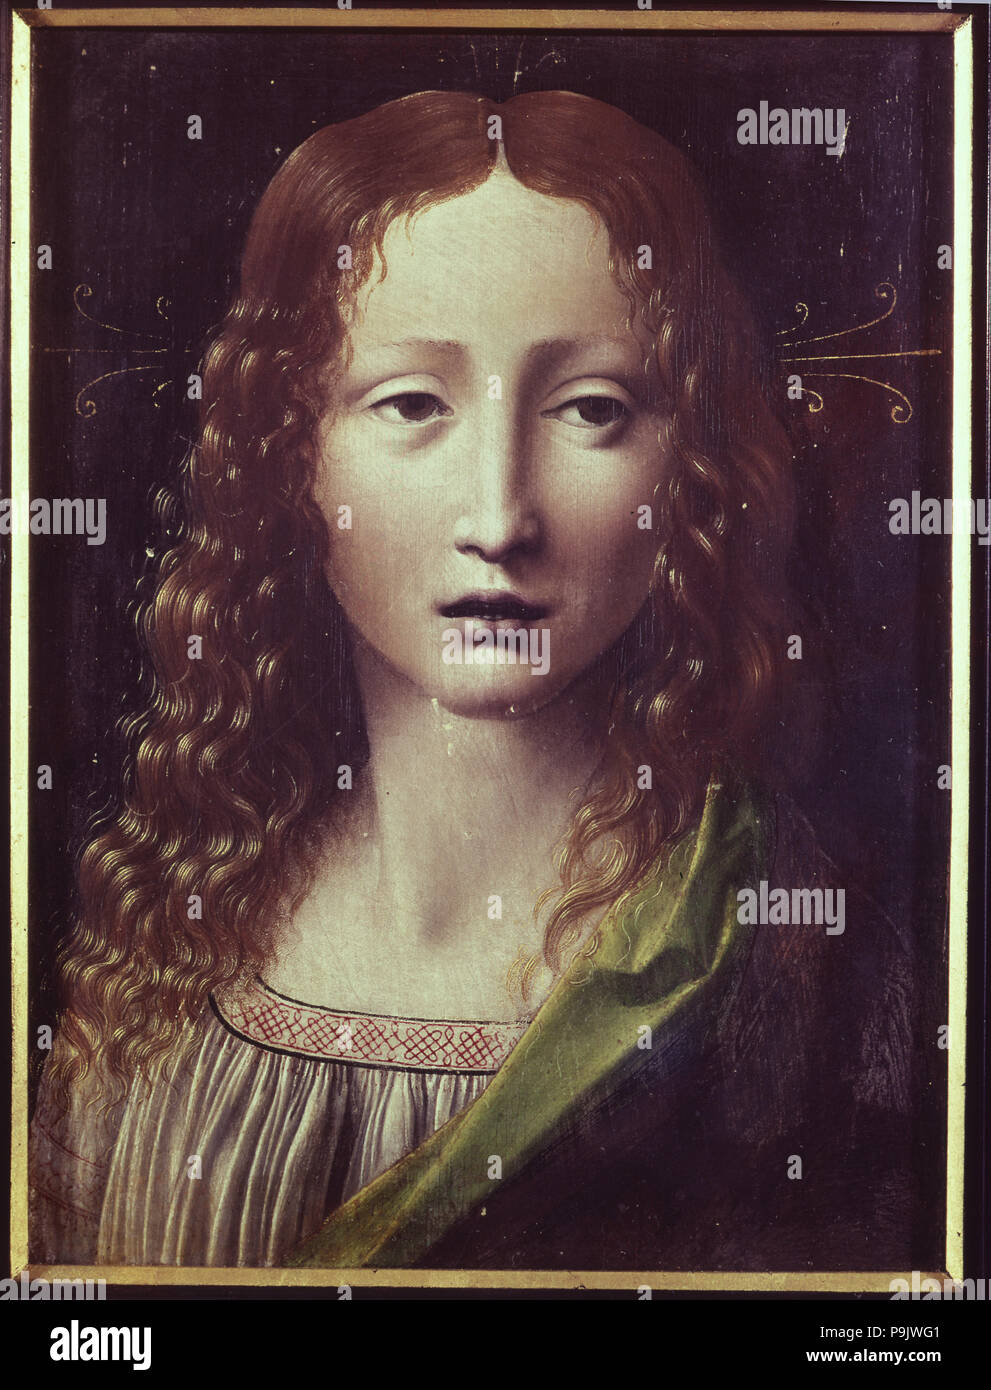 'Head' work by Leonardo da Vinci. Stock Photo